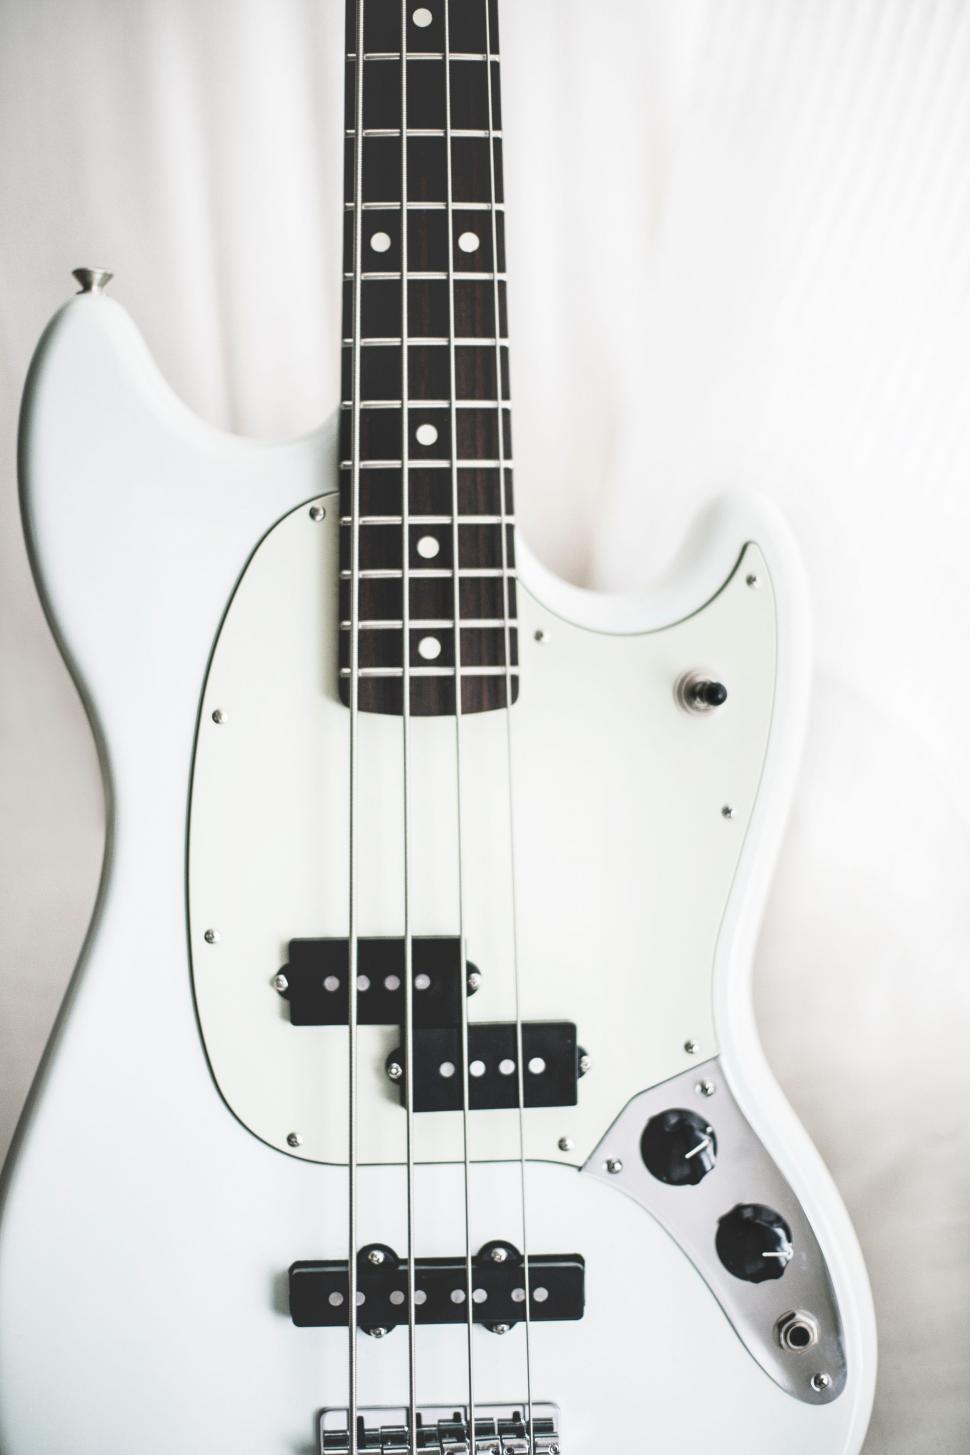 Free Image of White Bass Guitar on White Sheet 